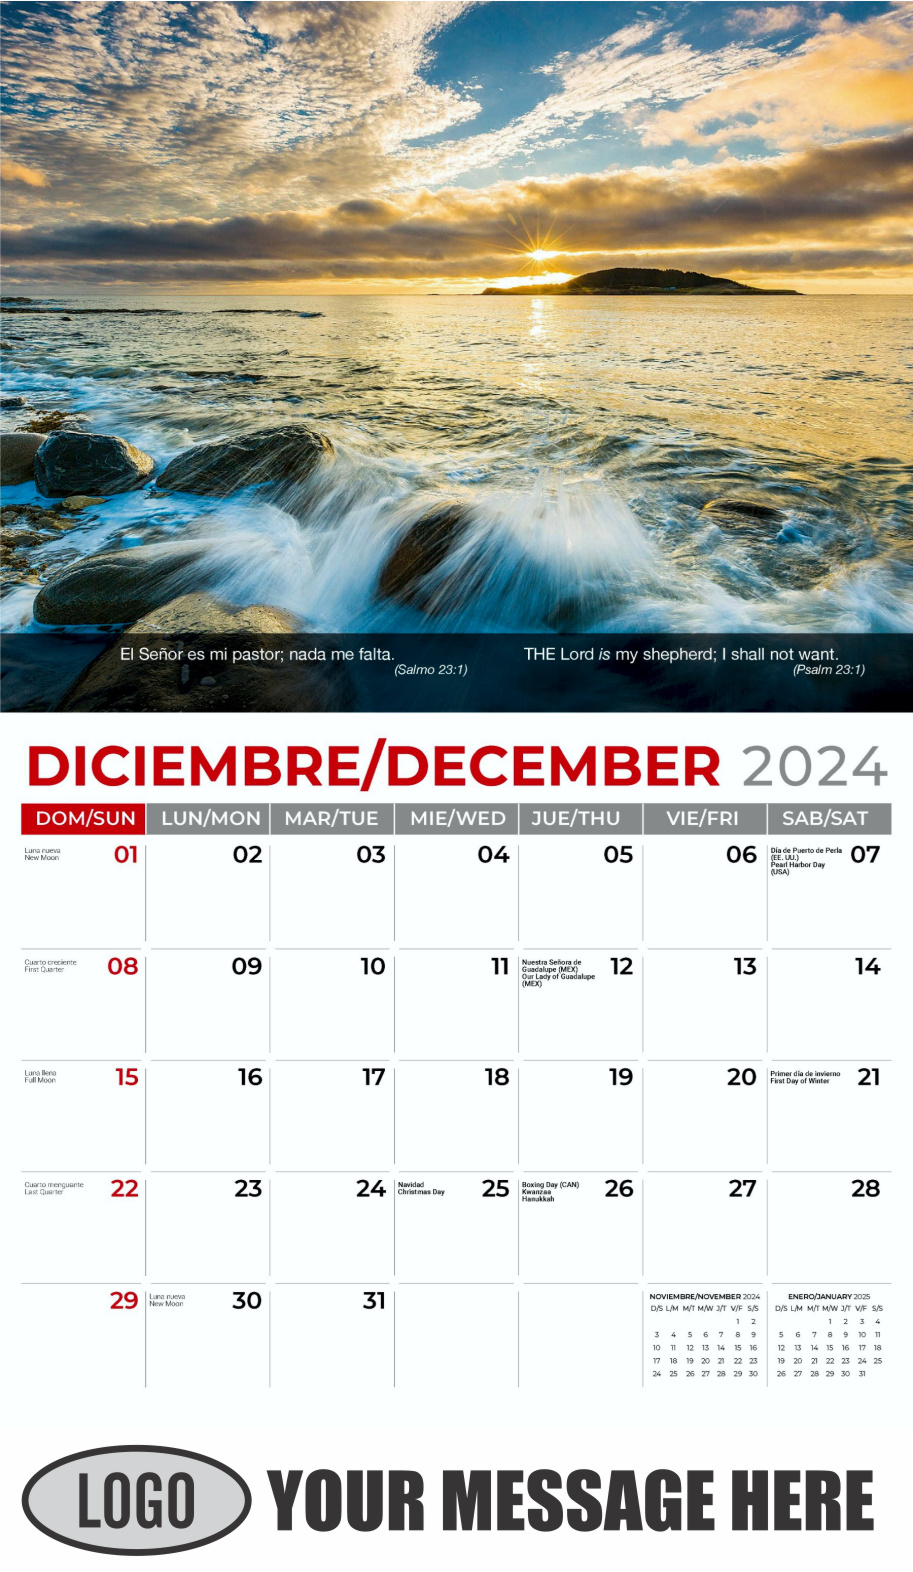 Faith Passages 2024 Bilingual Christian Faith Business Promotional Calendar - December